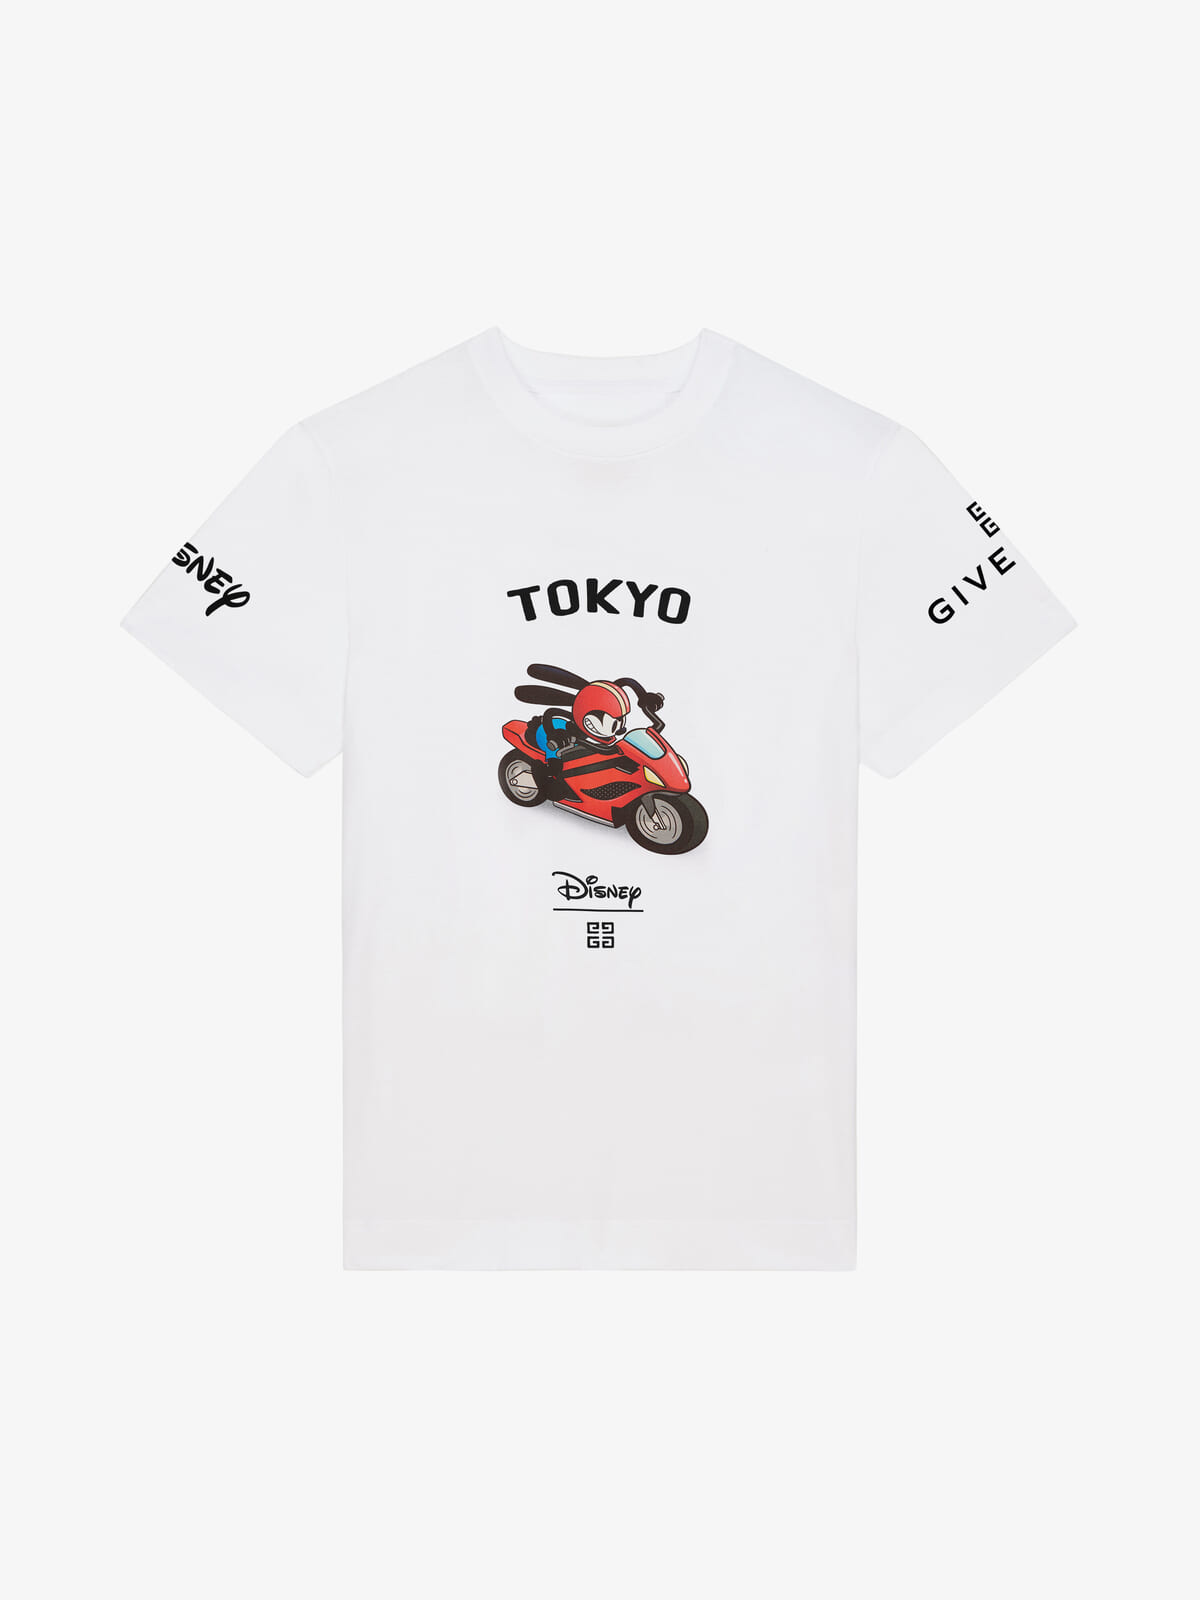 TOKYO Tシャツ